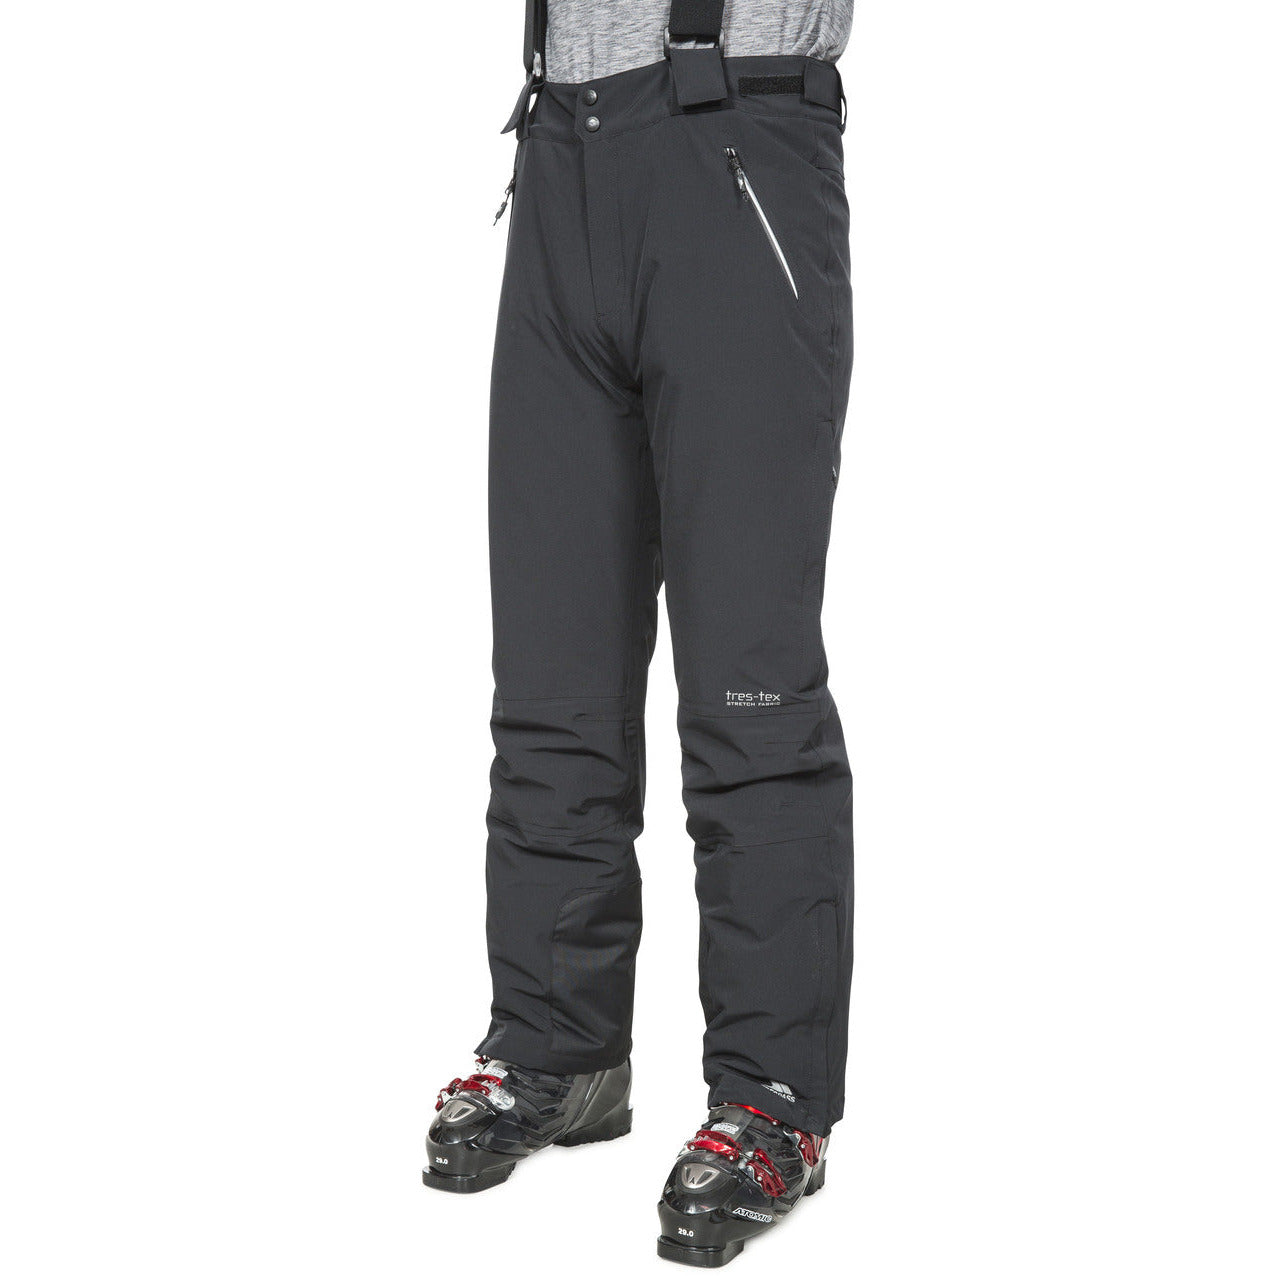 Pitstop - Mens Ski Trousers - Black